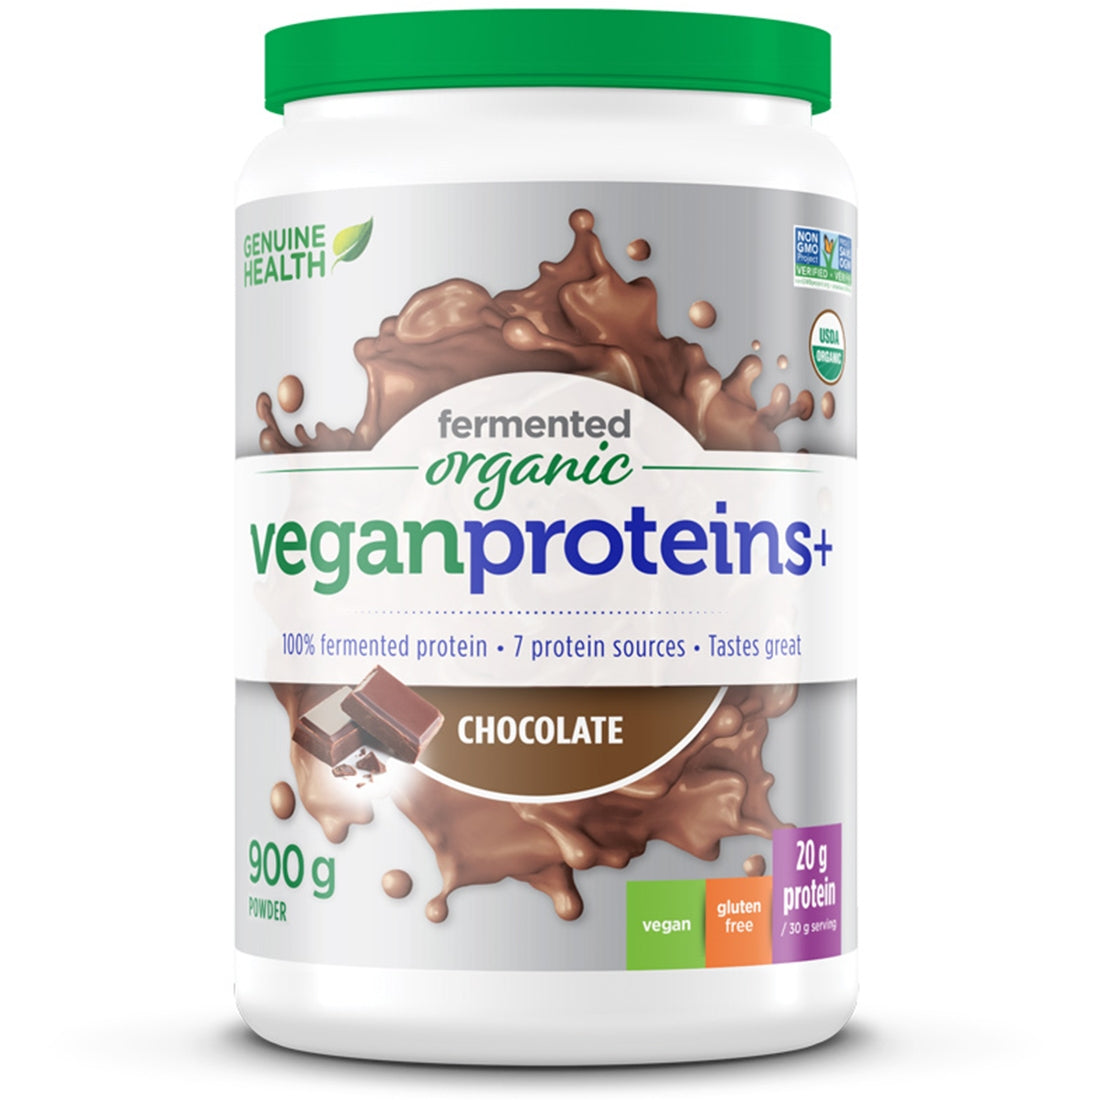 Chocolate 900g | Genuine Health Fermented Organic Vegan Proteins // chocolate flavour